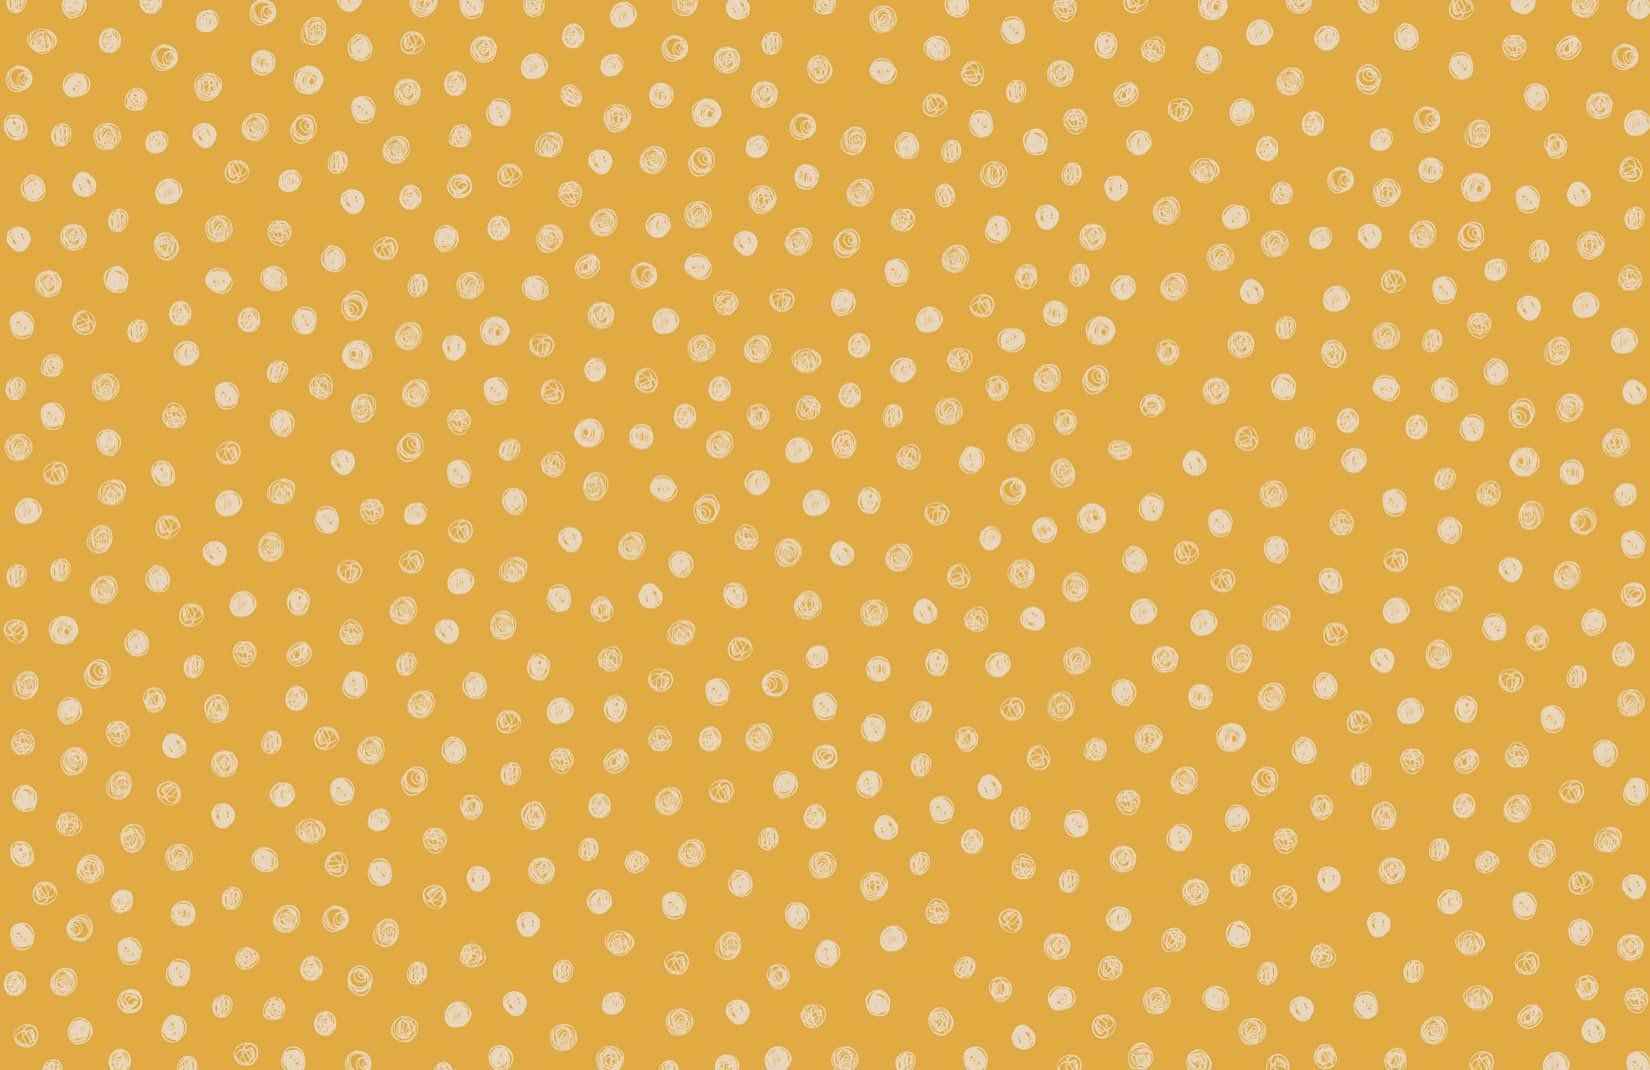 A vibrant yellow polka dot wallpaper backdrop Wallpaper